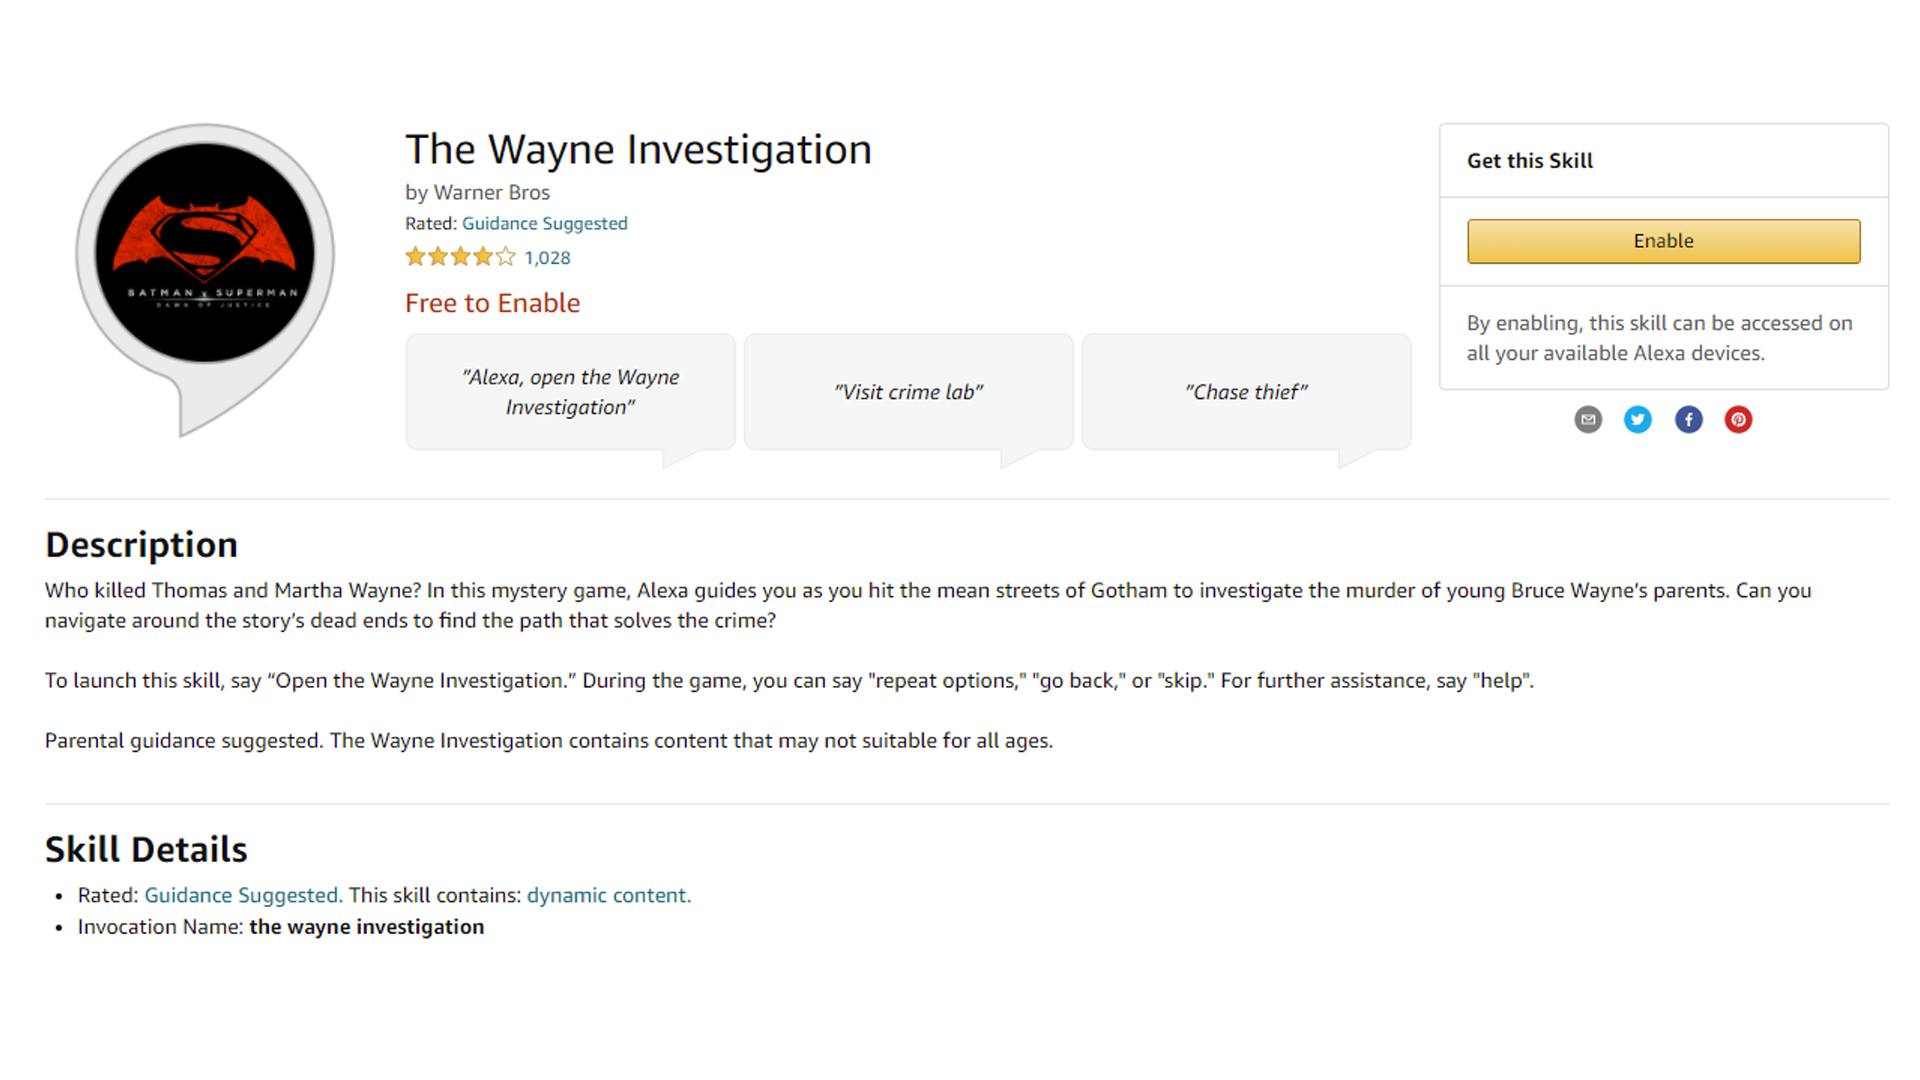 The Wayne Investigation game for Alexa